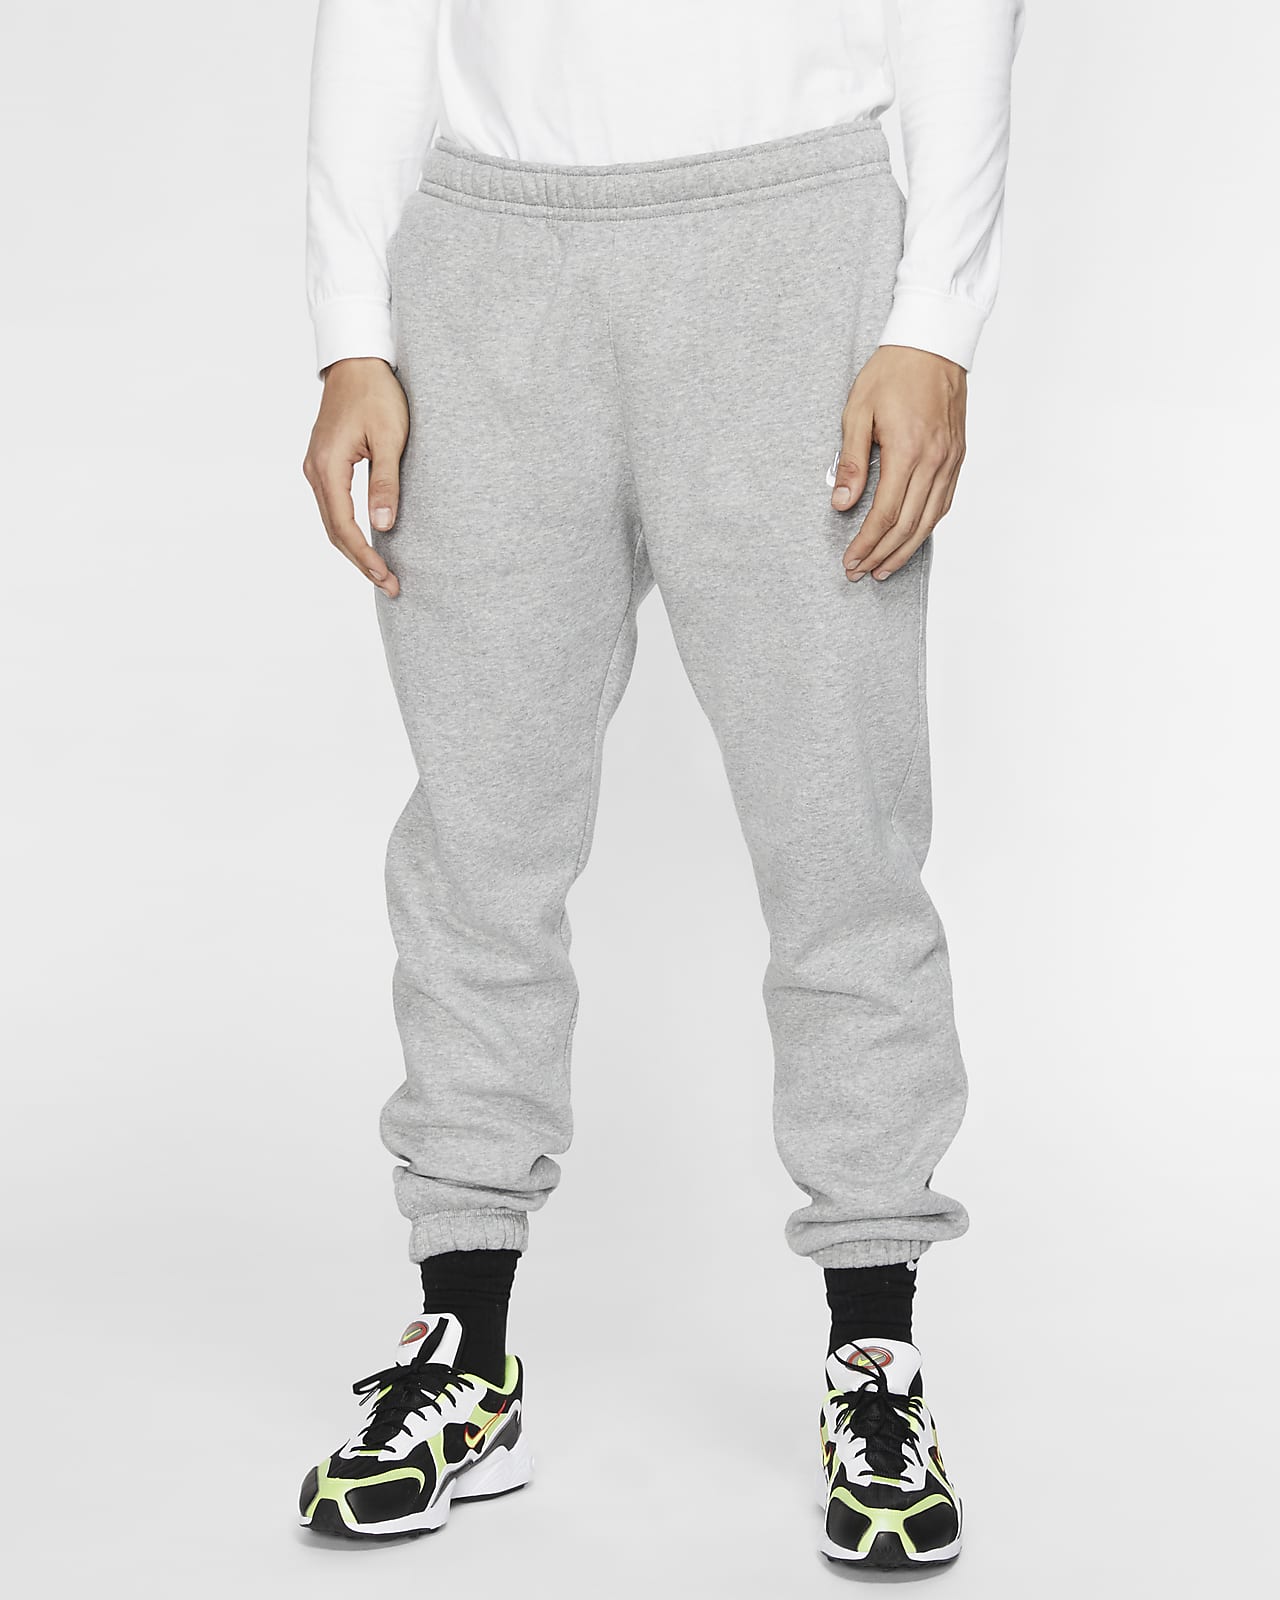 Nike Sportswear Club Fleece Pantalons - Home